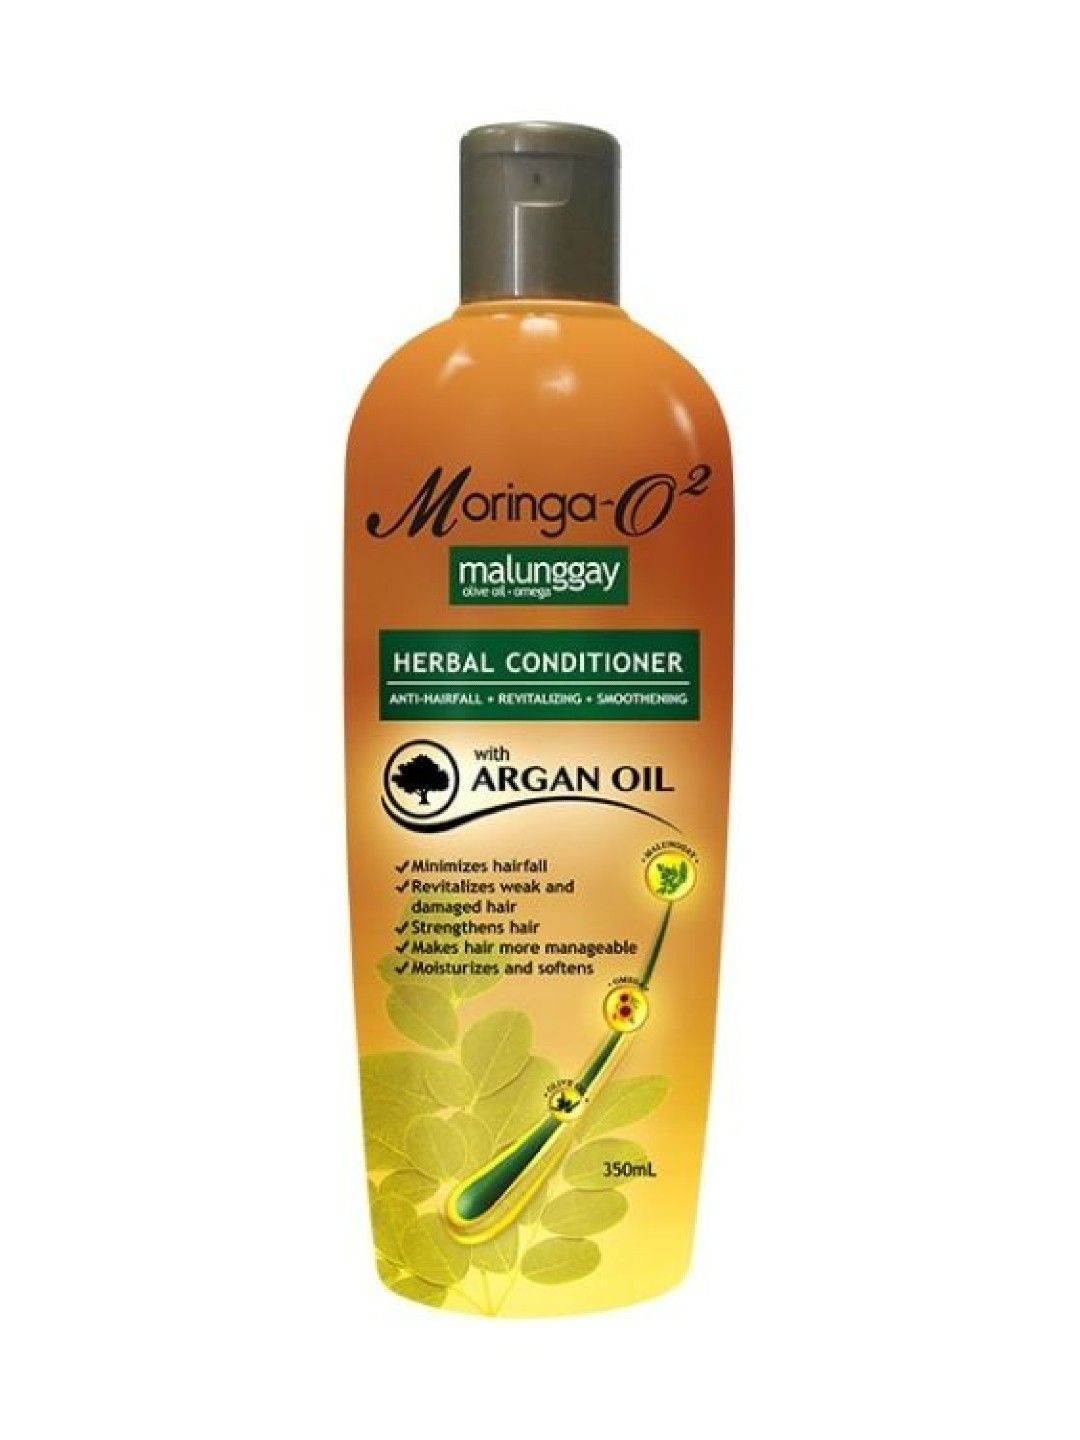 Moringa-O2 Anti-Hairfall Conditioner with Argan Oil (350ml)